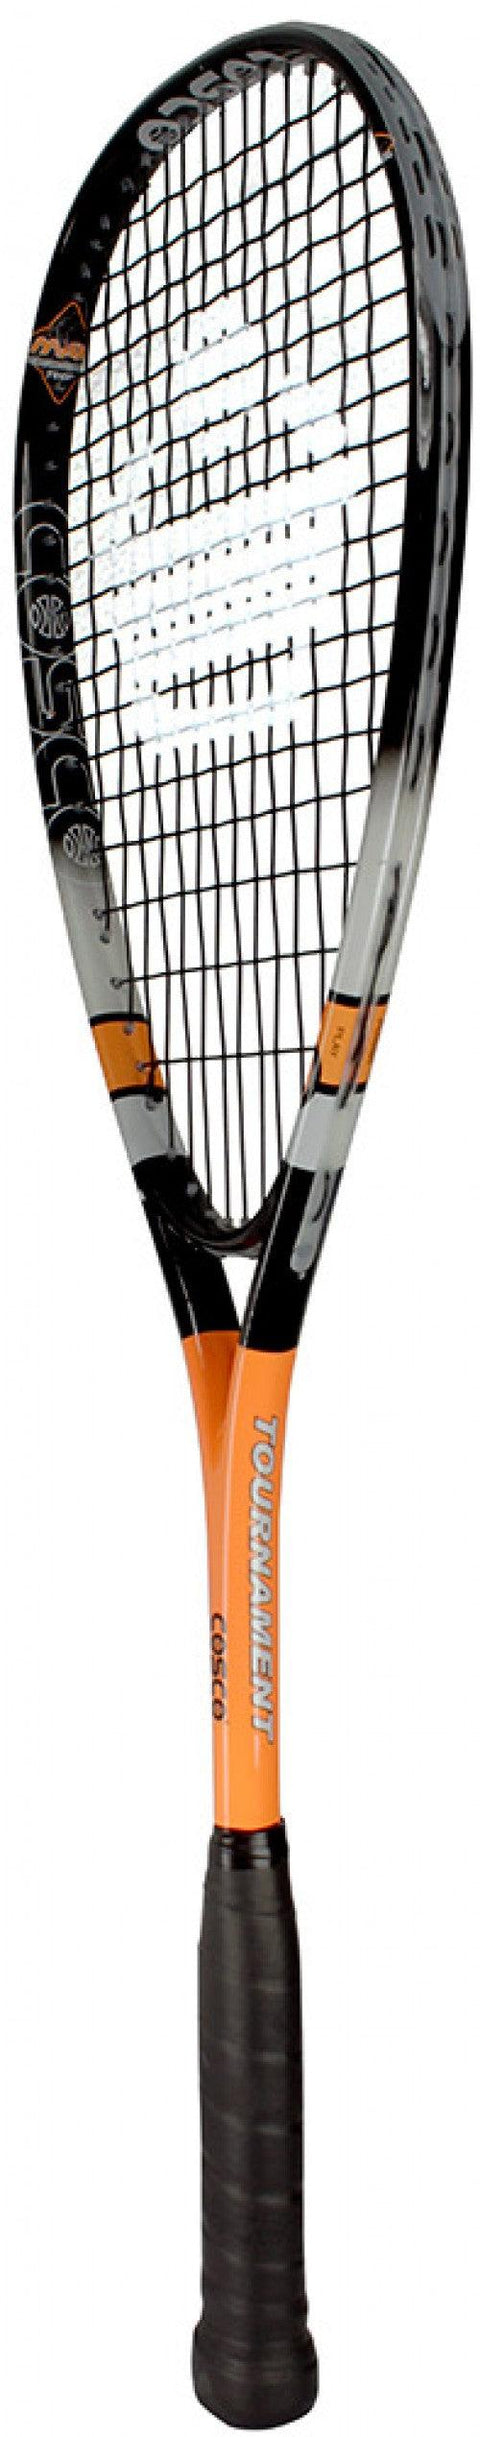 Cosco Tournament Squash Racquet, 76-inch | KIBI Sports